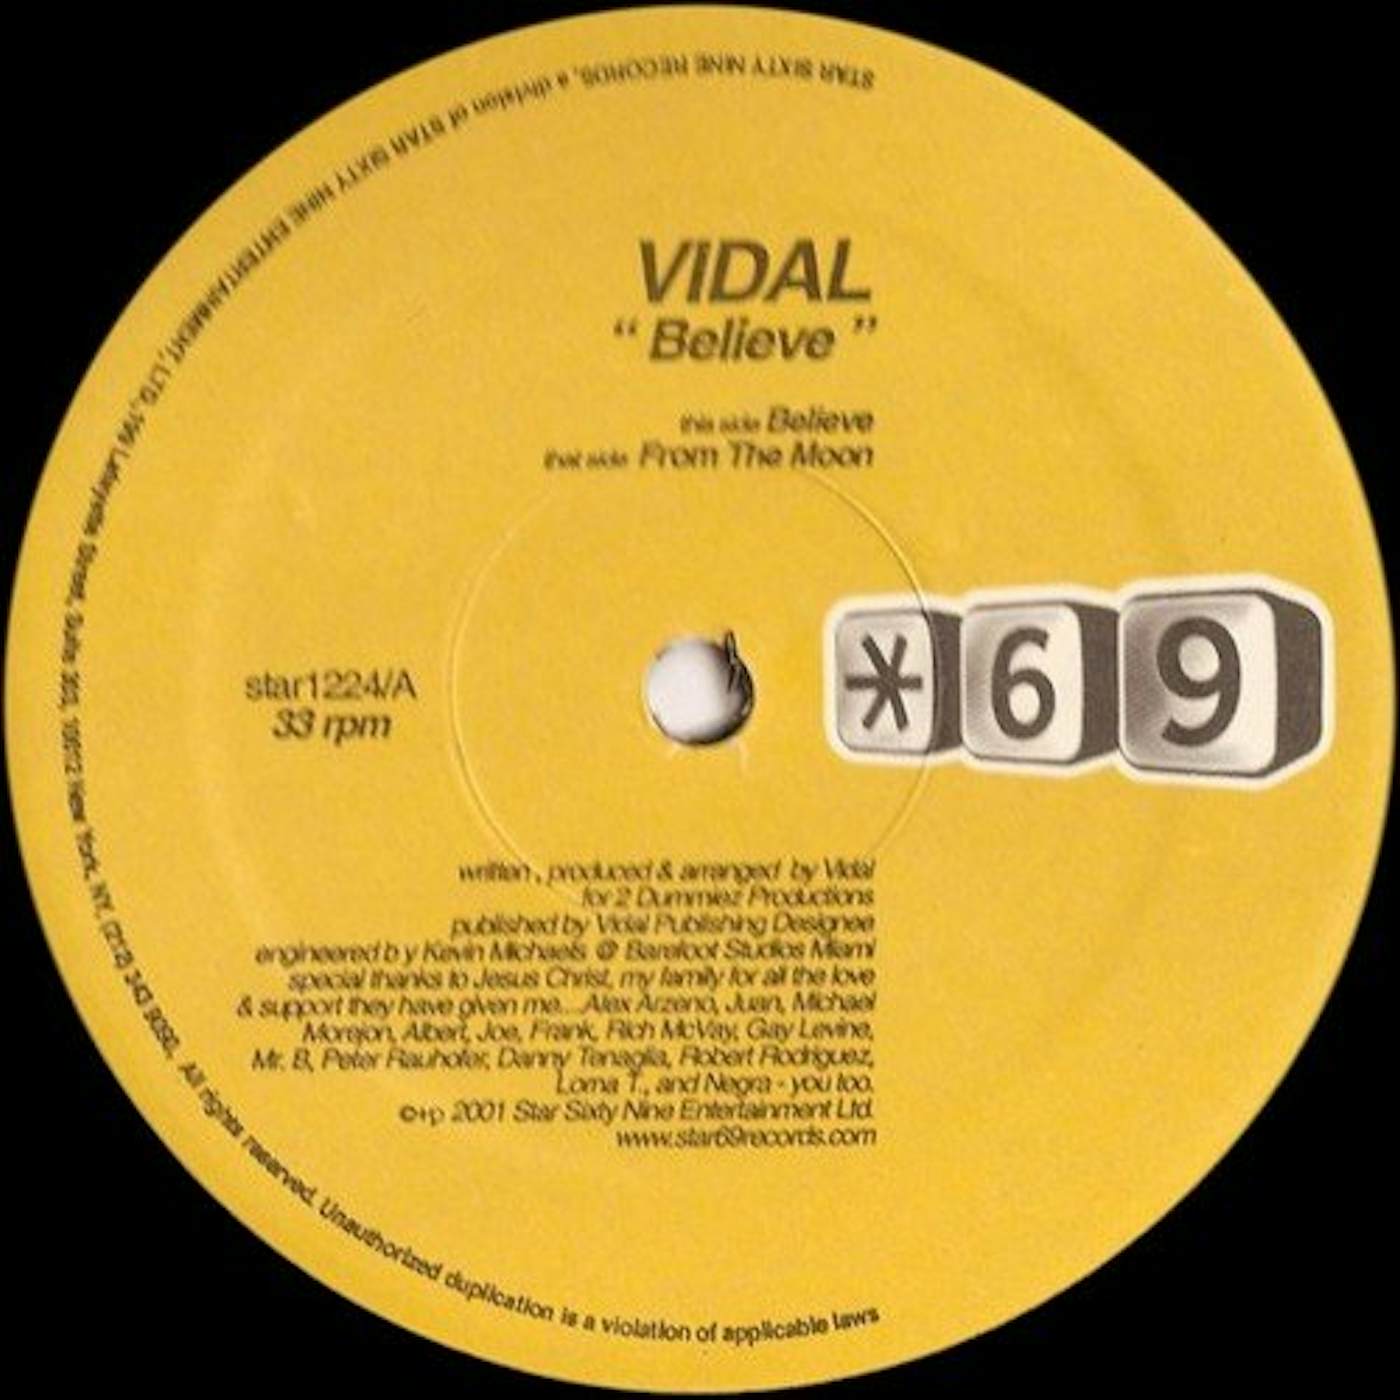 Vidal Believe Vinyl Record